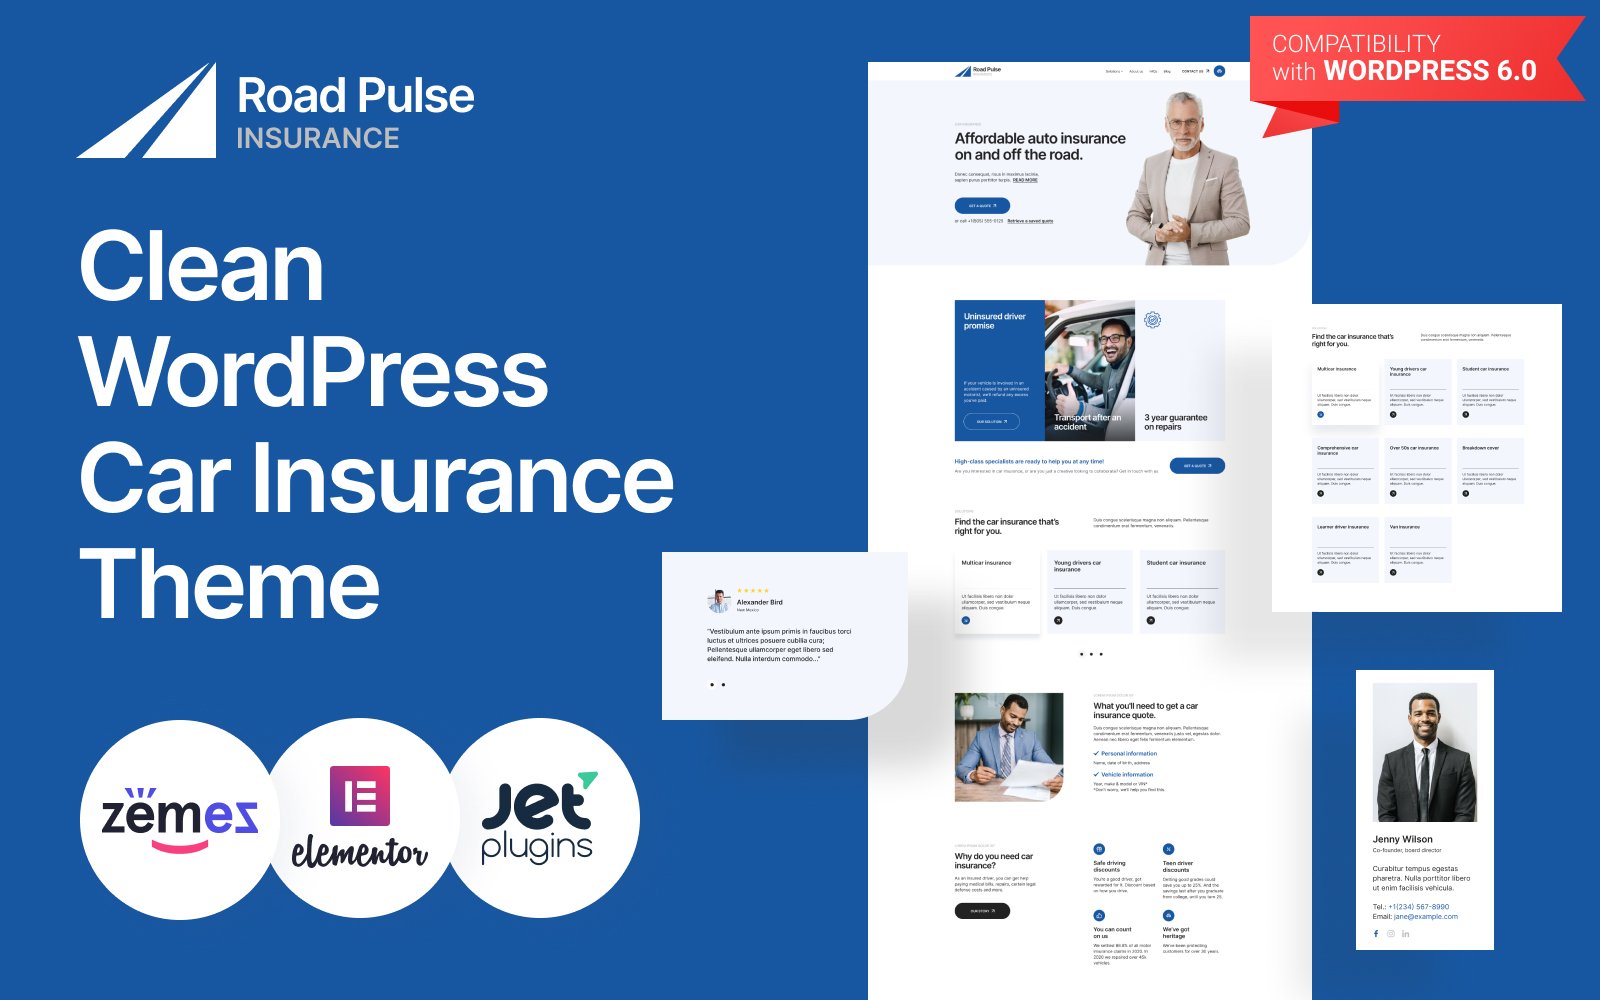 Road Pulse - Clean WordPress Car Insurance Theme WordPress Theme